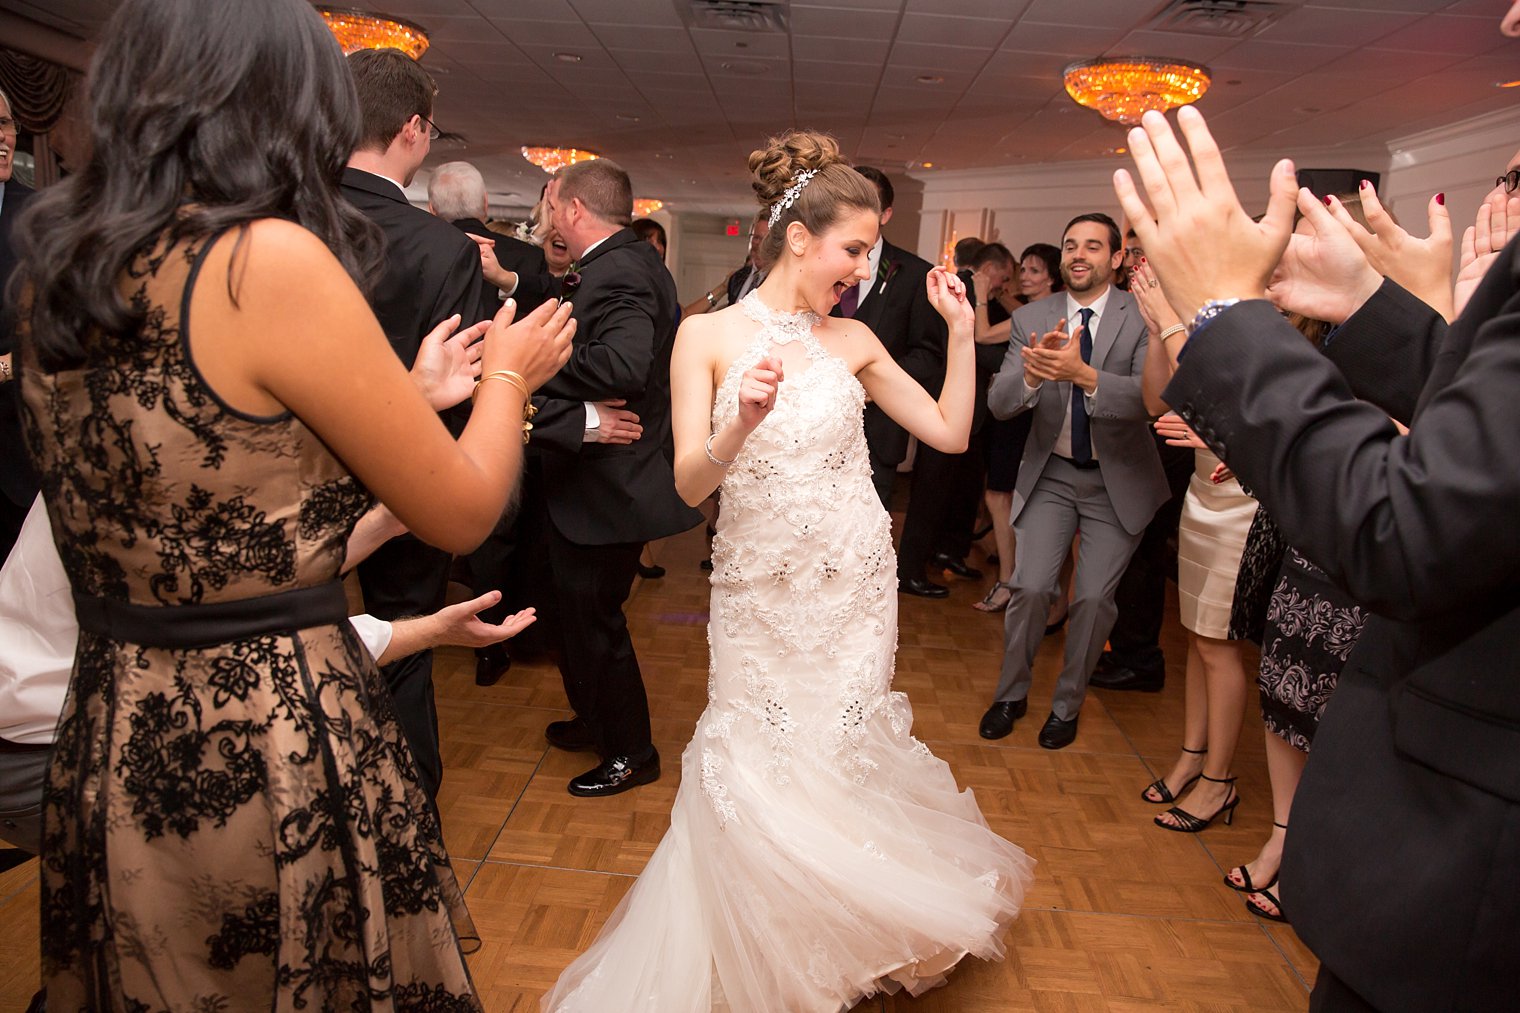 Basking Ridge Country Club dancing bride photo